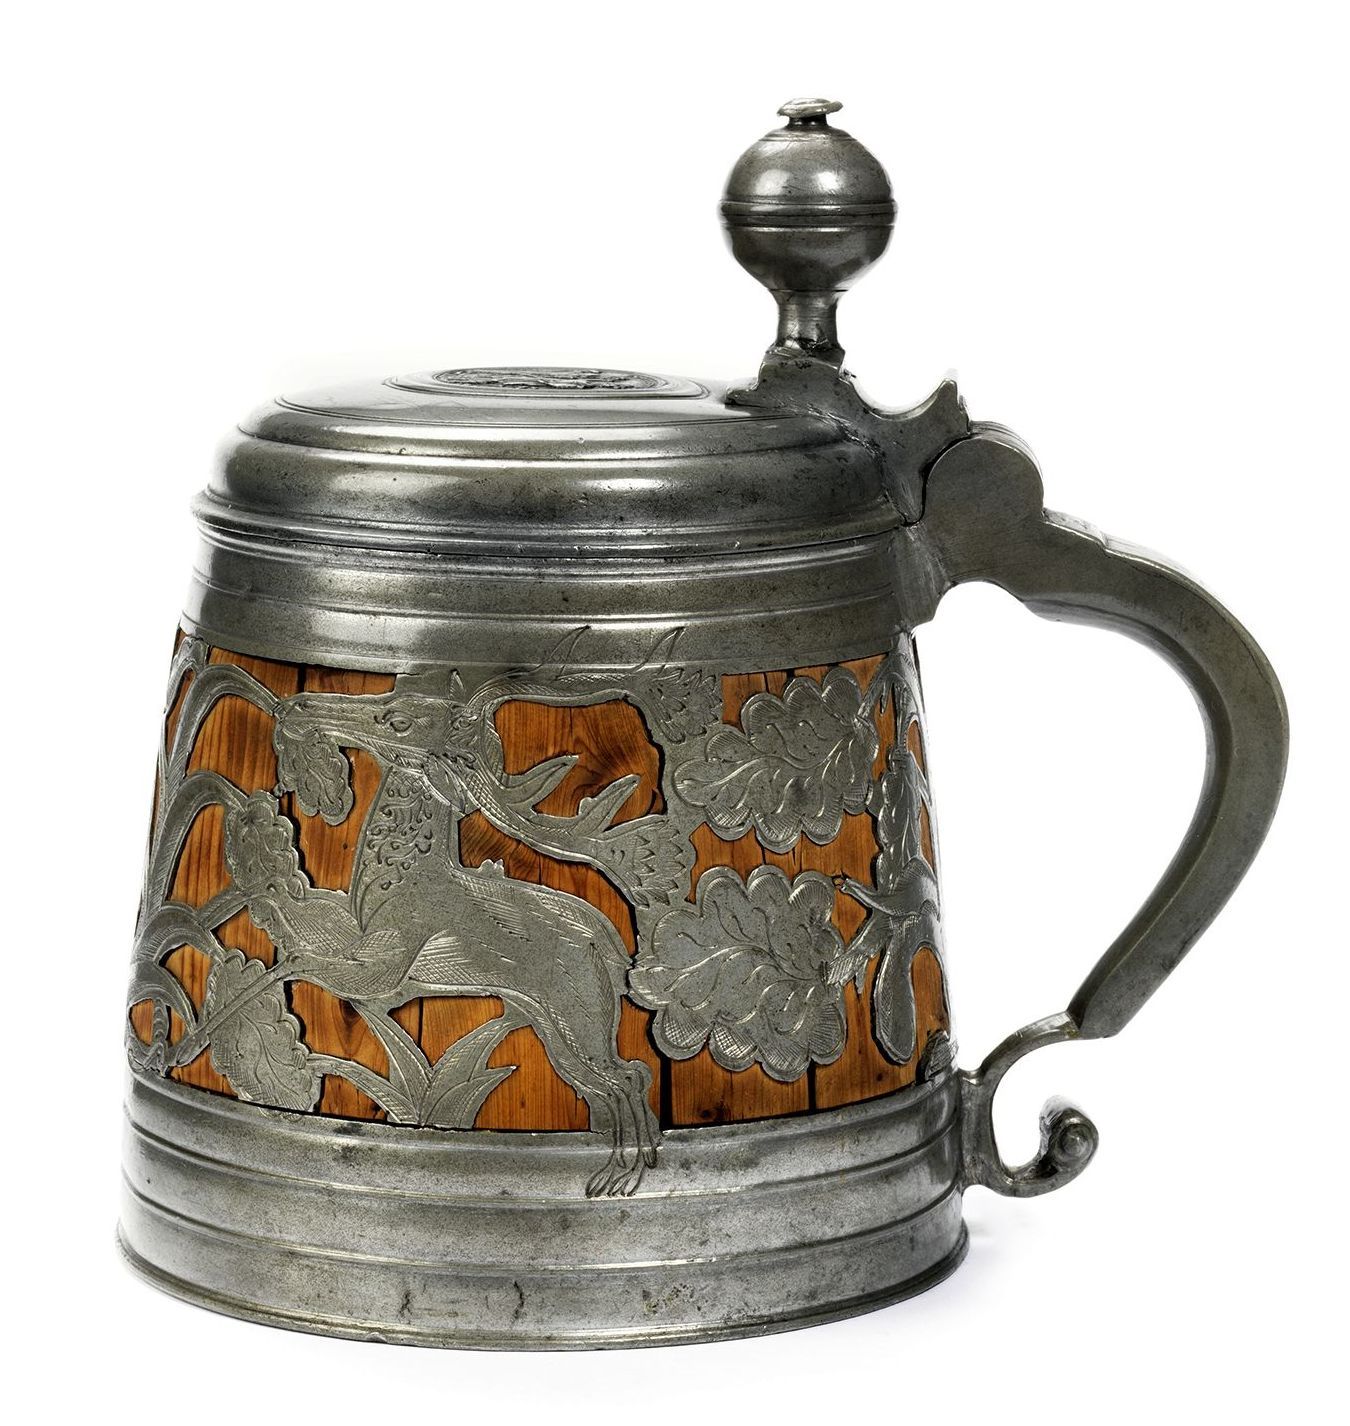 18th century Kulmbach Lichtenhain tankard stave jug